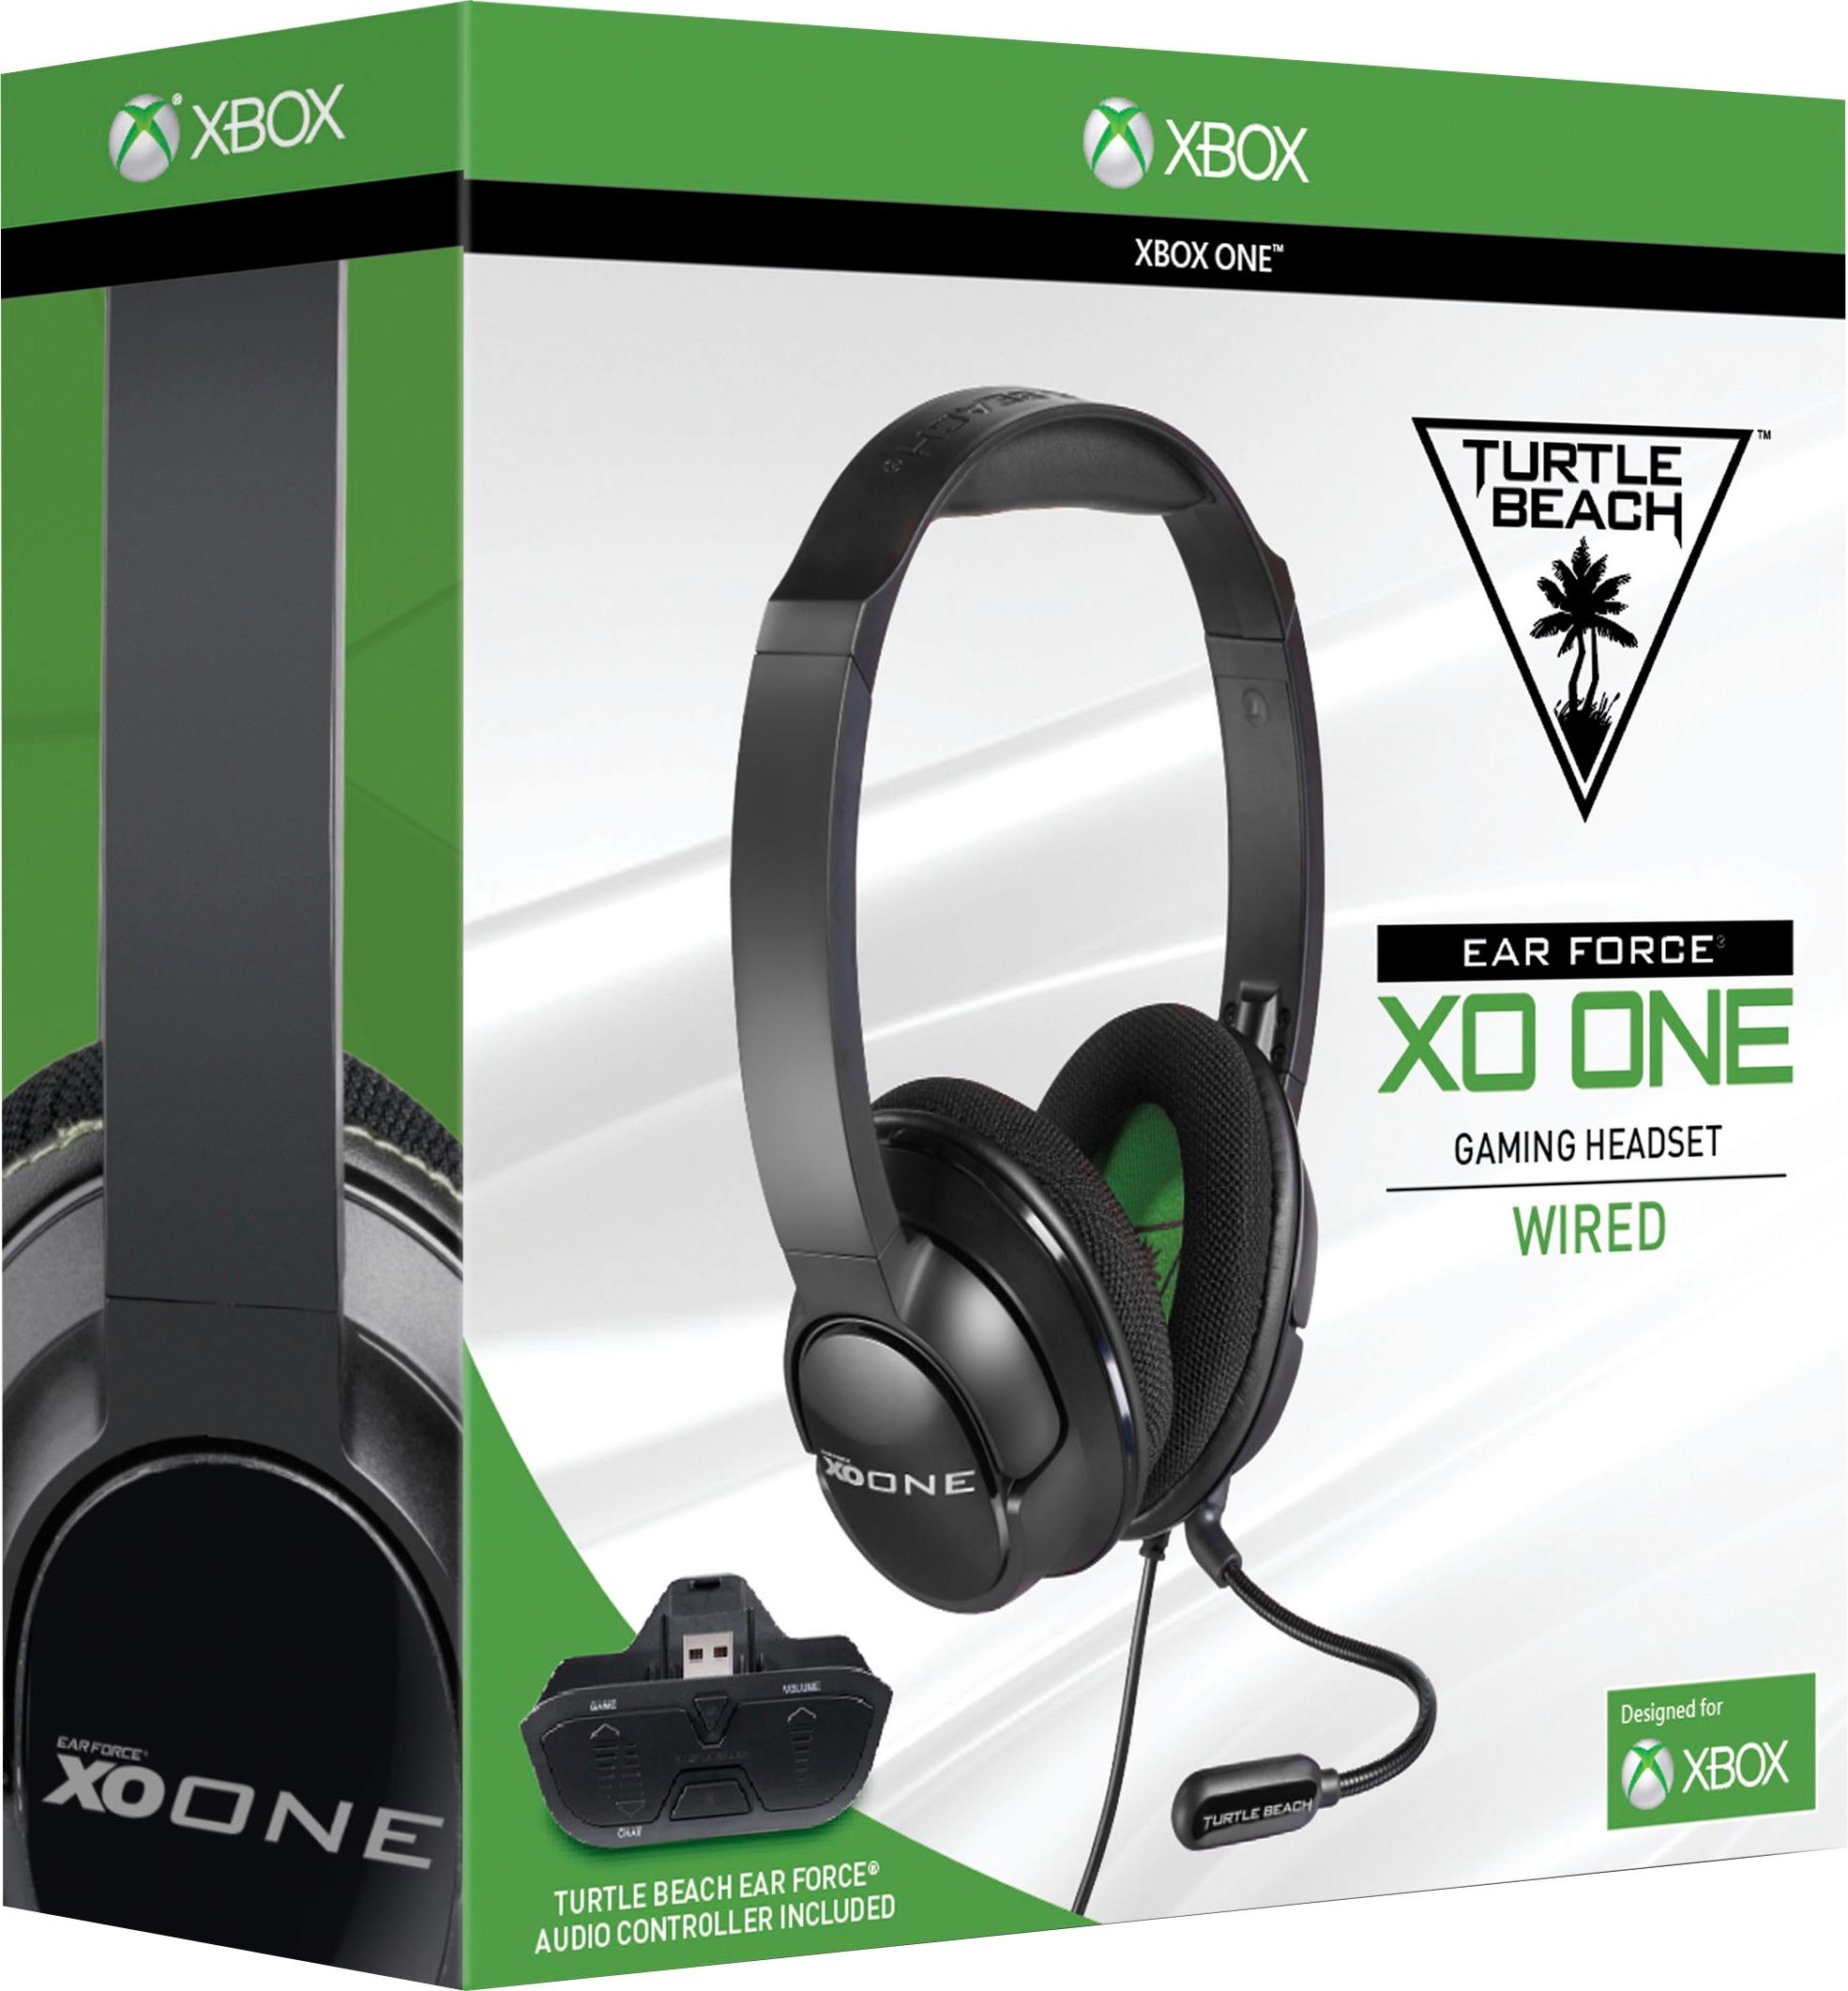 xbox one ear force xo one gaming headset